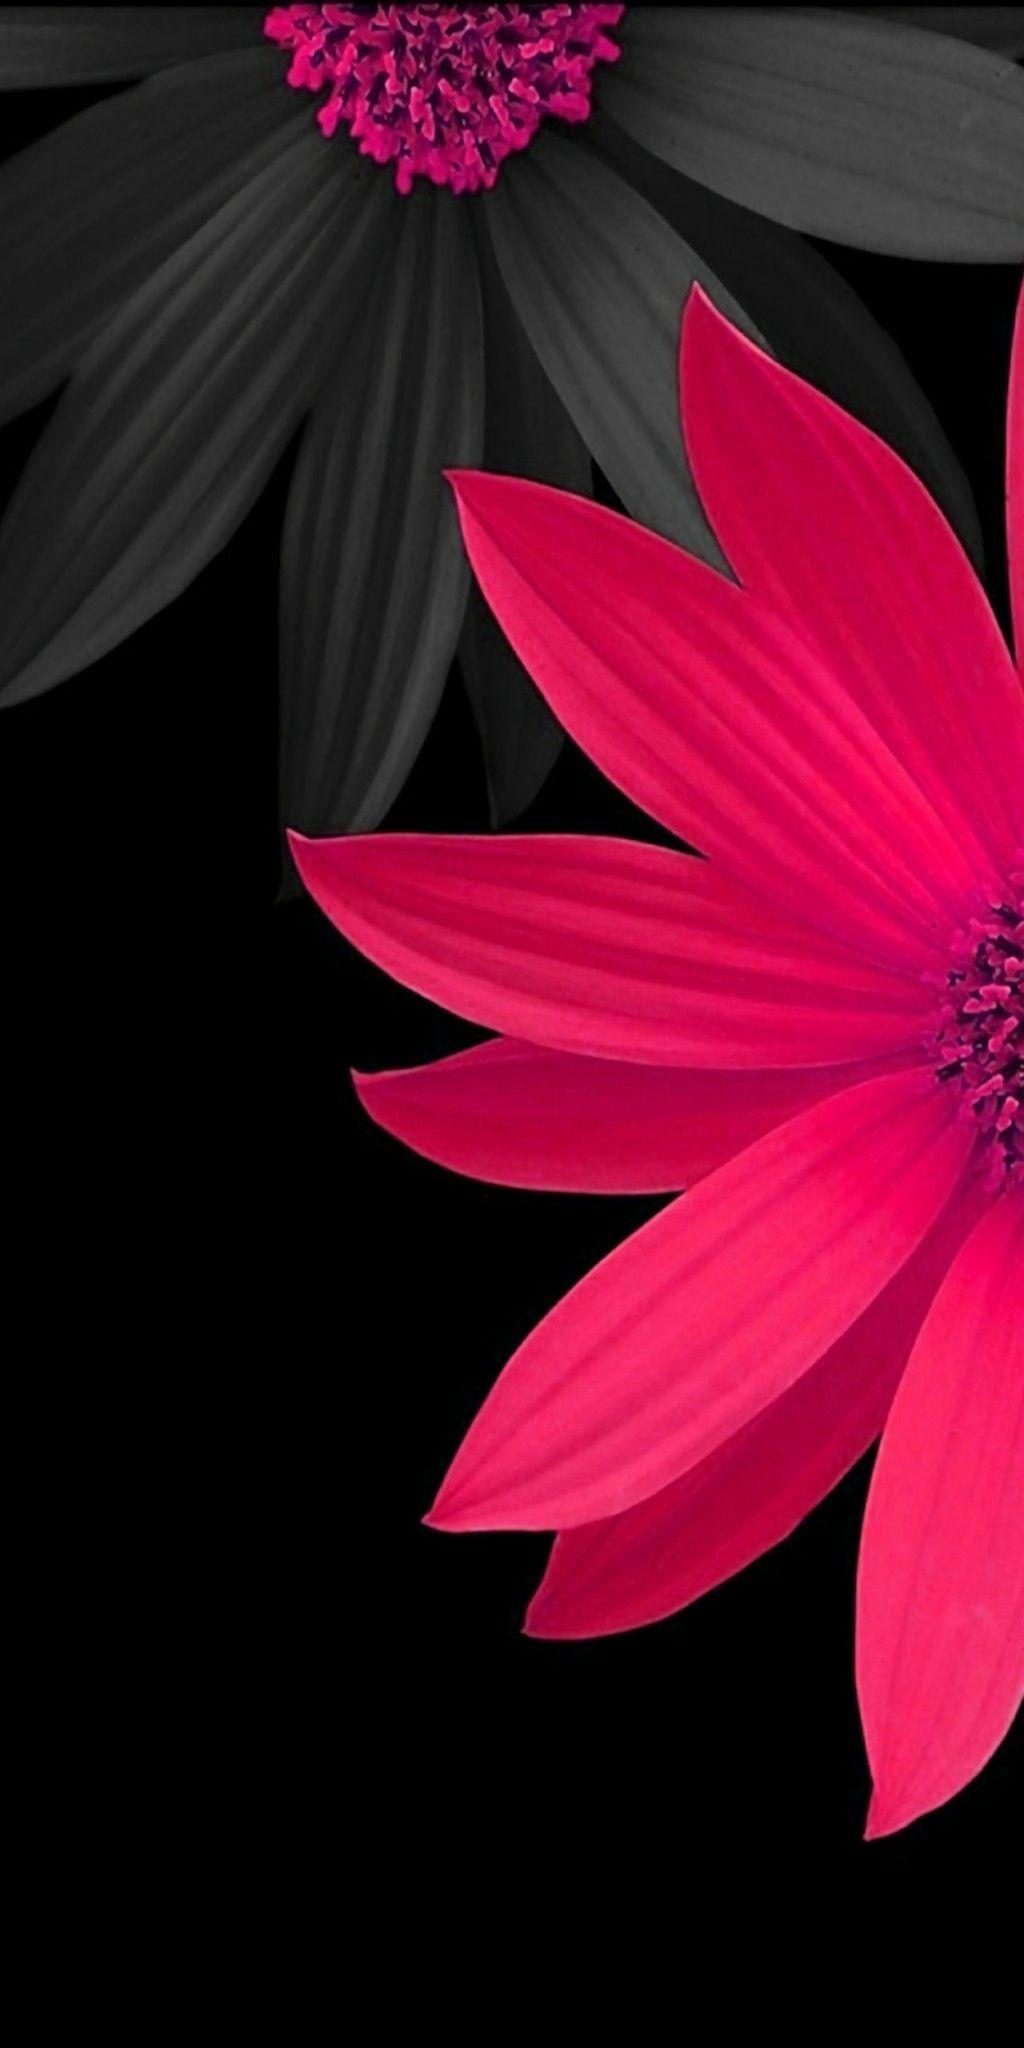 Pink and Black 3D Flowers Wallpaper. Latar belakang, Bunga daisy